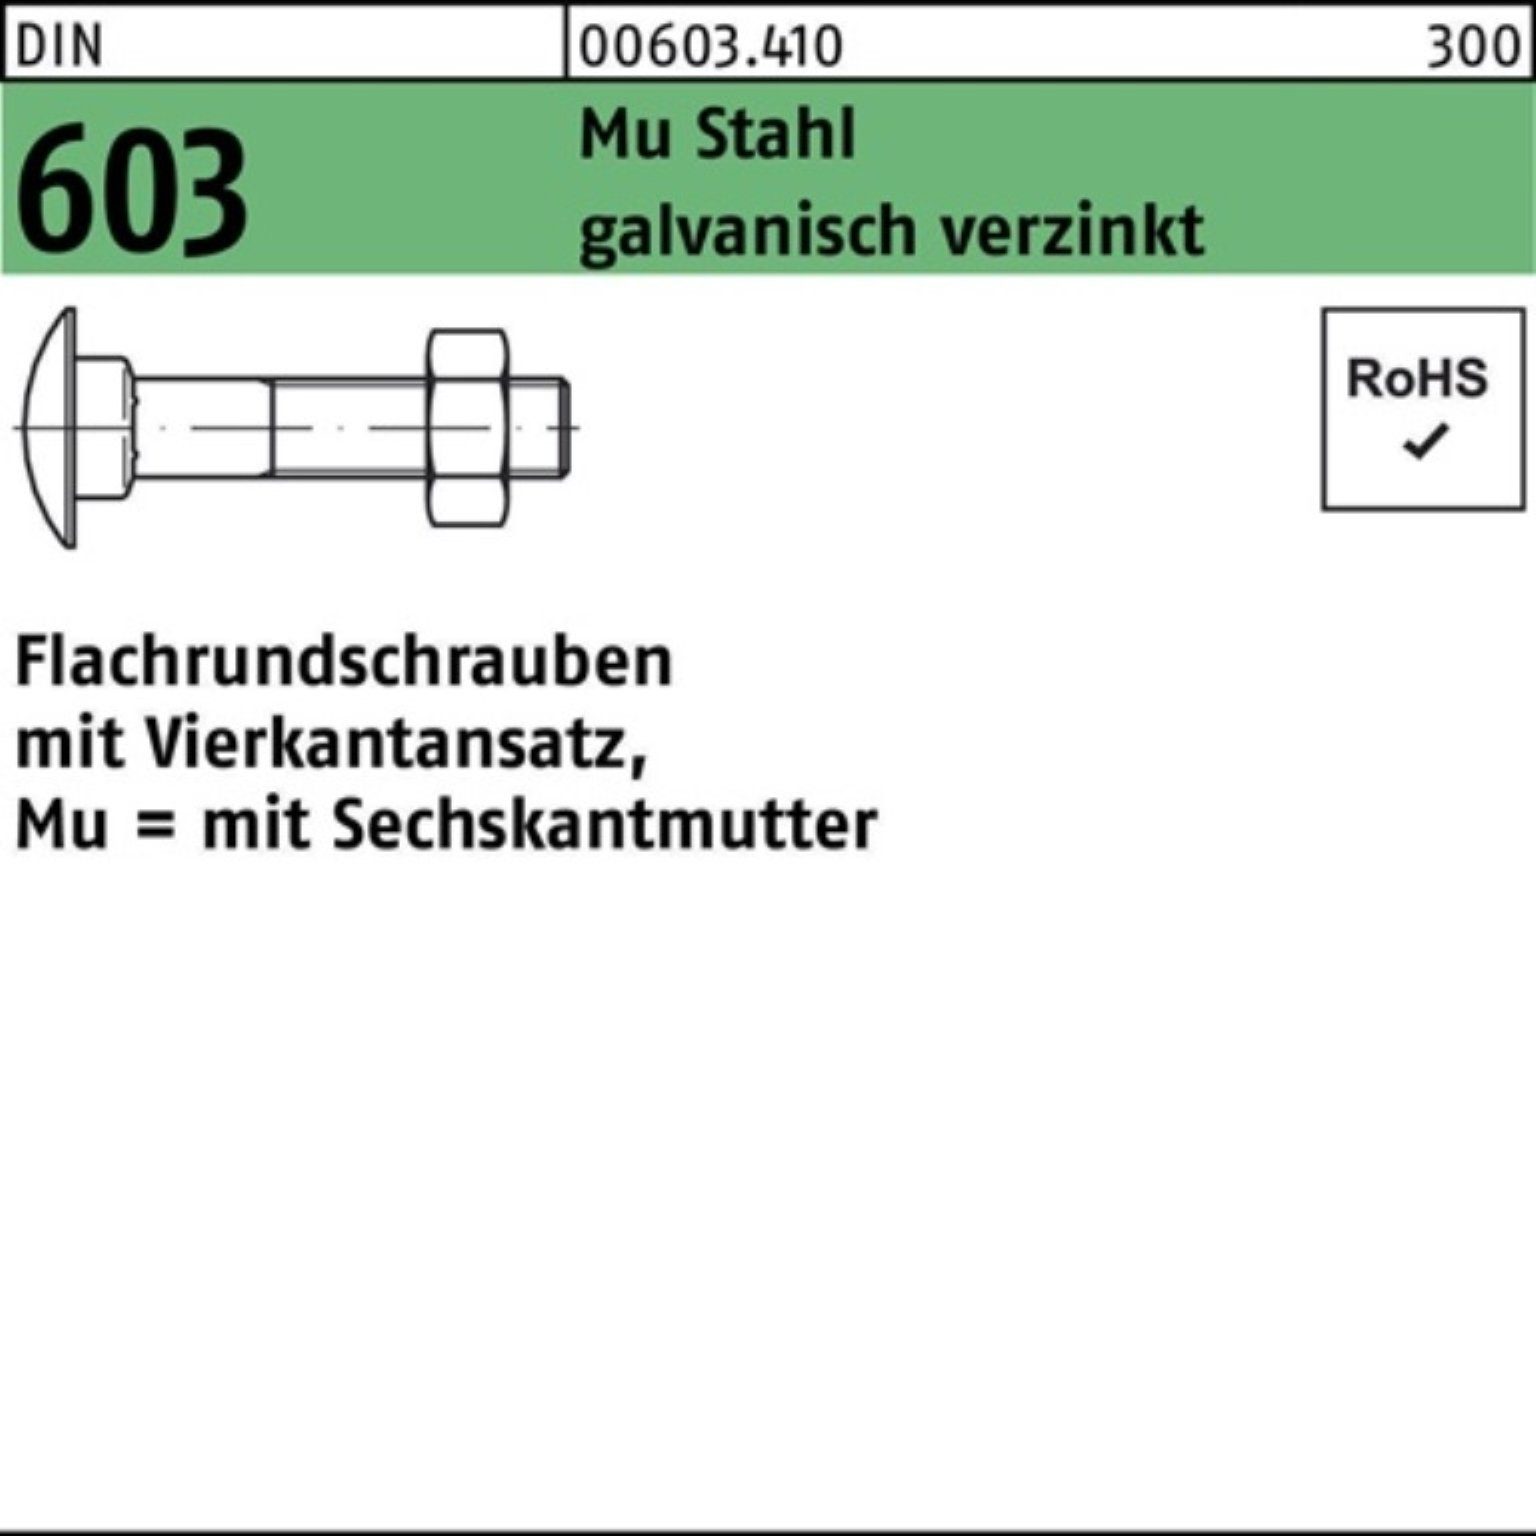 603 Vierkantansatz/6-ktmutter M5x70 Pack Reyher M 200er Flachrundschraube DIN Schraube